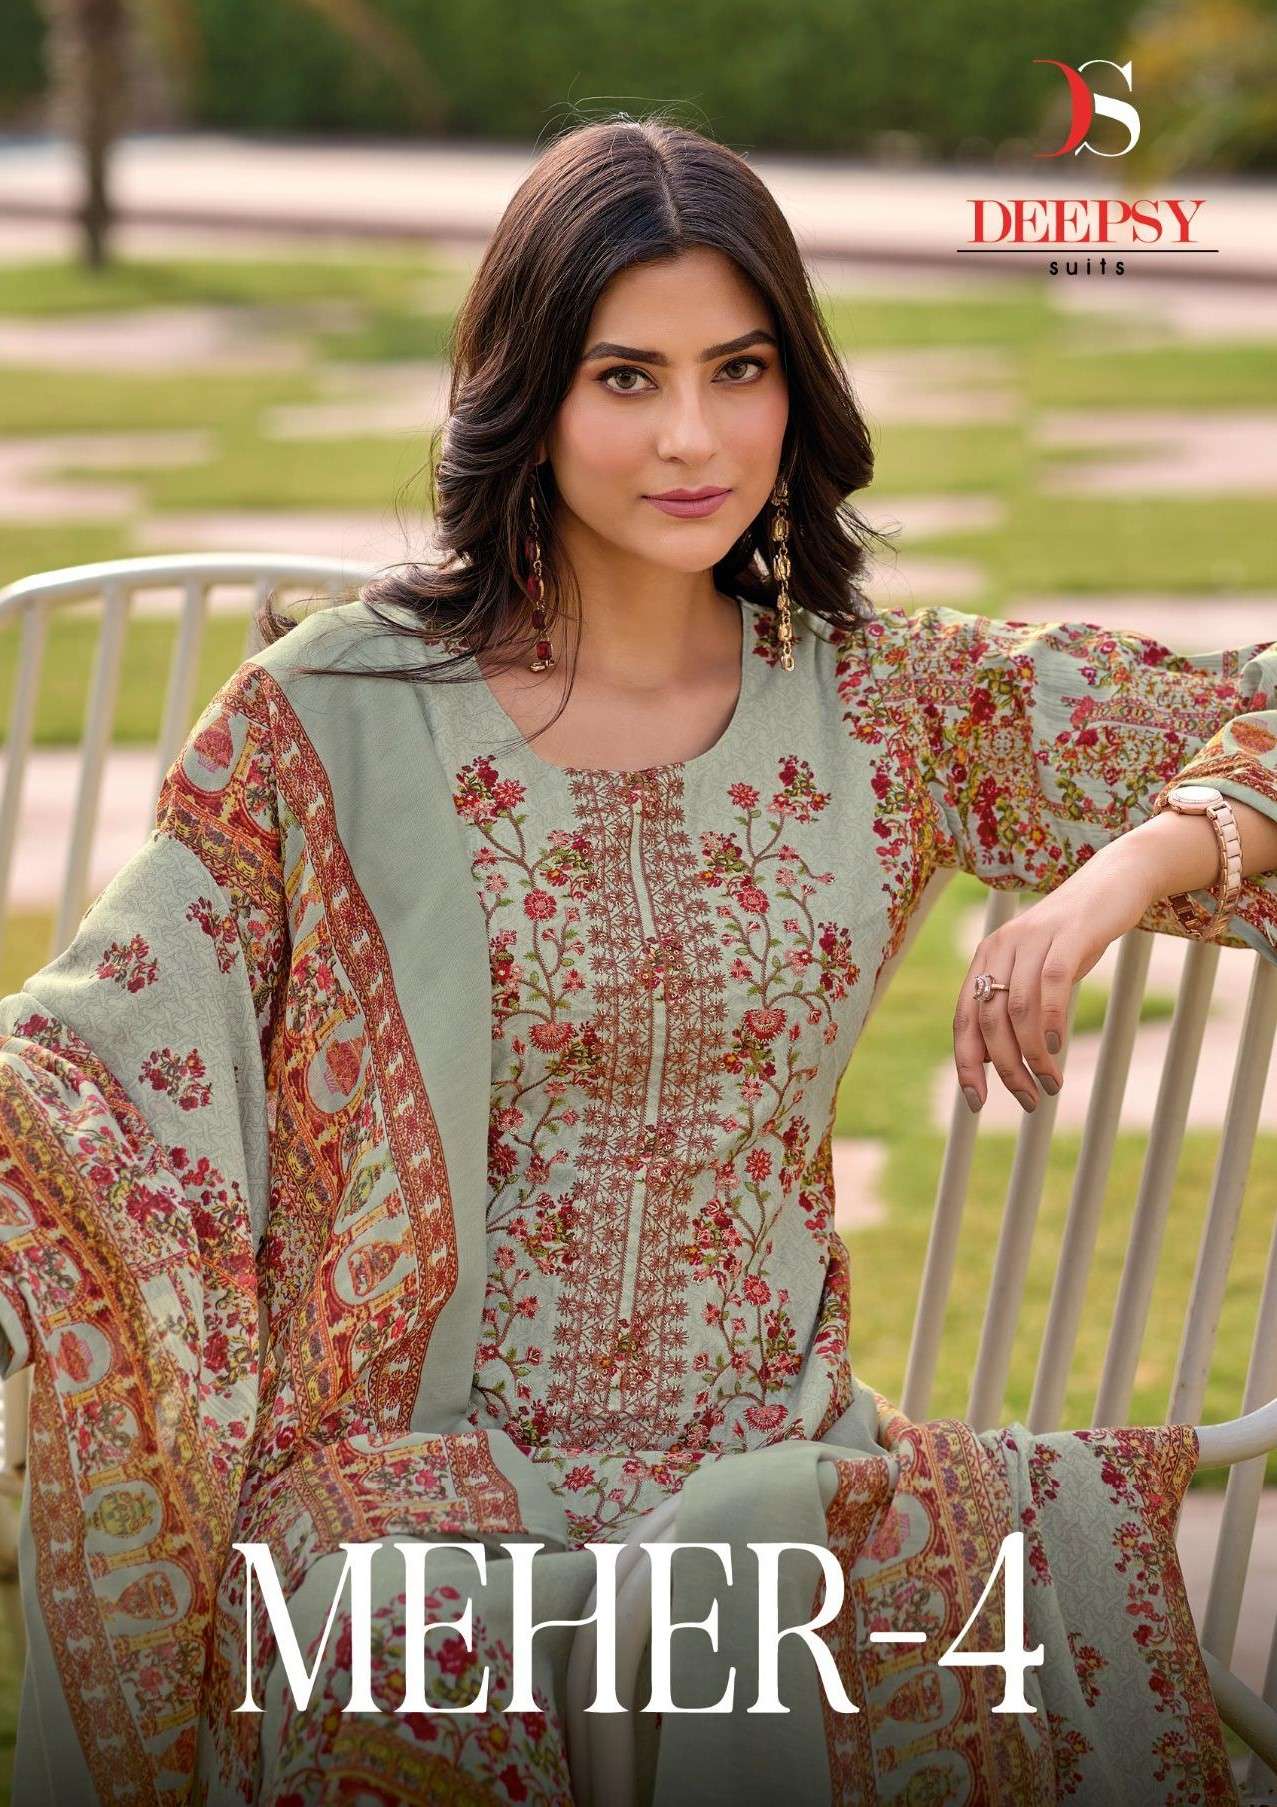 meher vol-4 by deepsy suits 11001-11006 series stylsih look designer pakistani salwar suits wholesale rate surat gujarat 